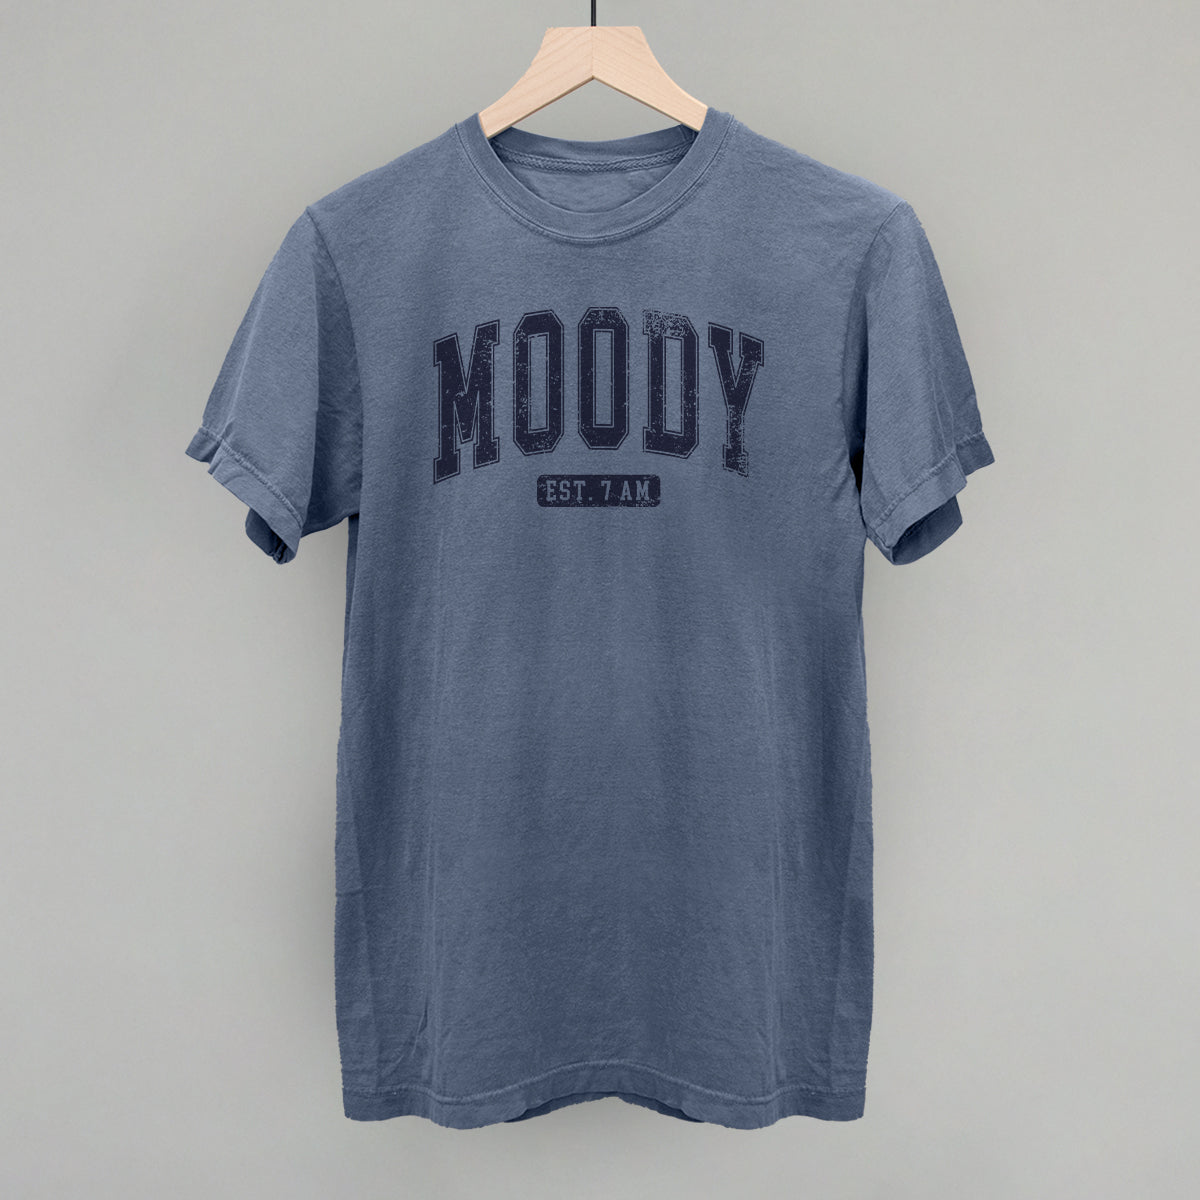 Moody Est. 7 AM